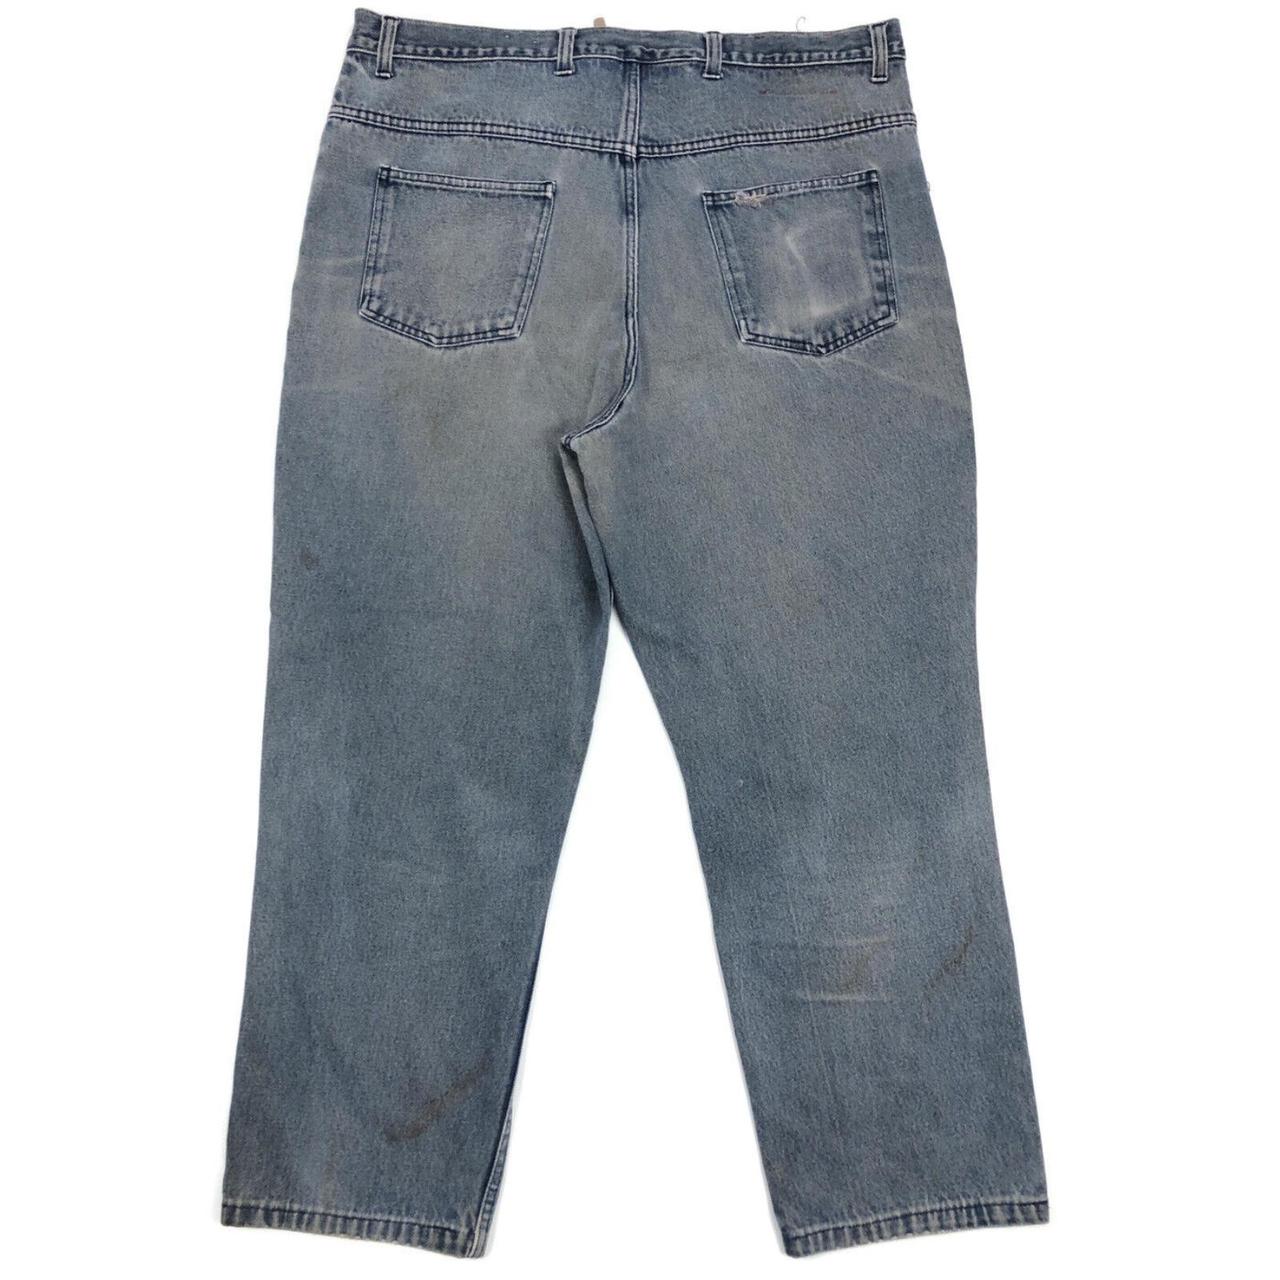 vintage 90s 80s Work Worn Ripped Up Jeans Mens 38x27... - Depop